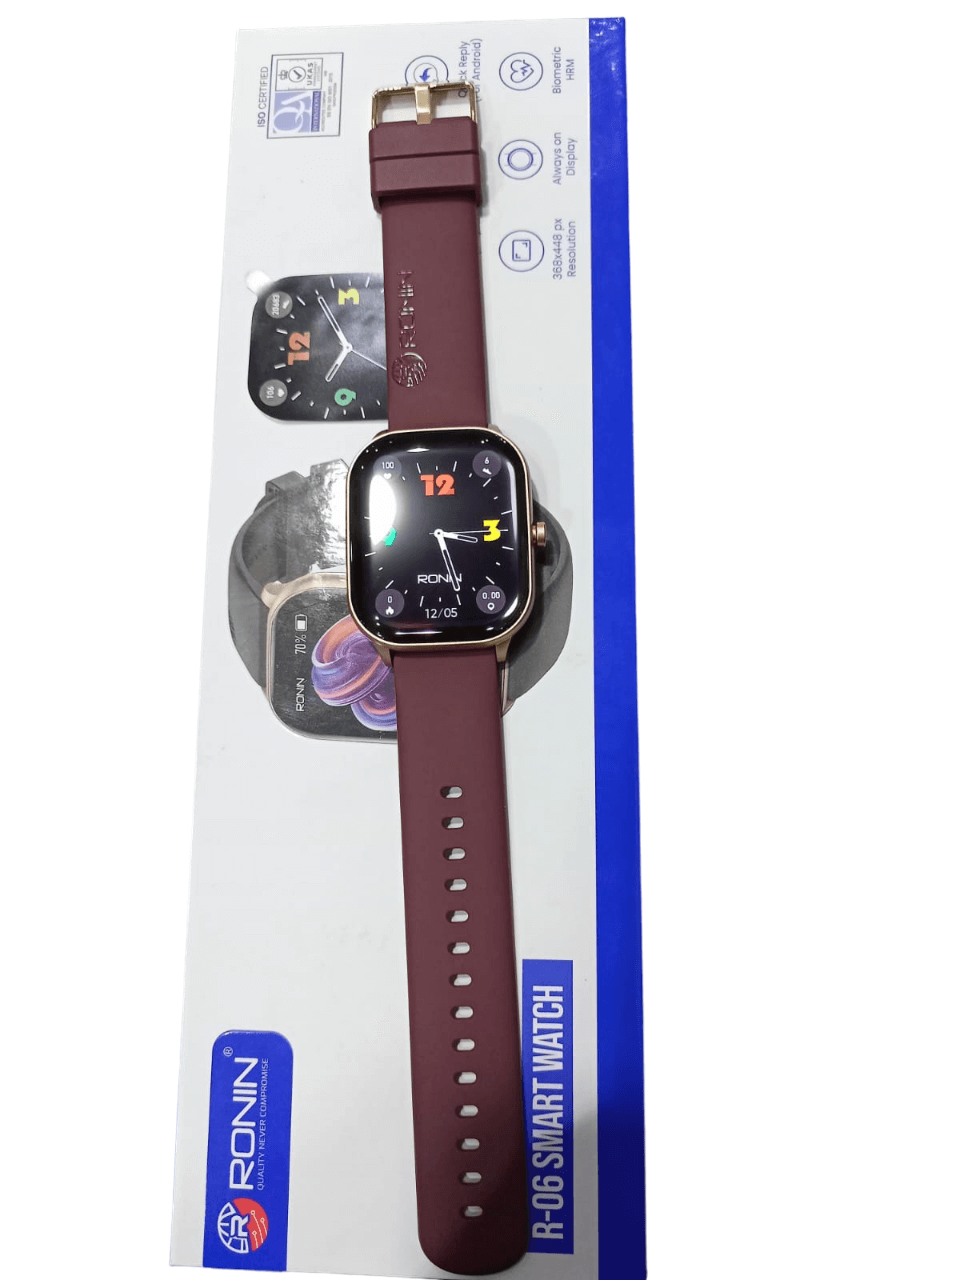 Buy Ronin r-06 smartwatch